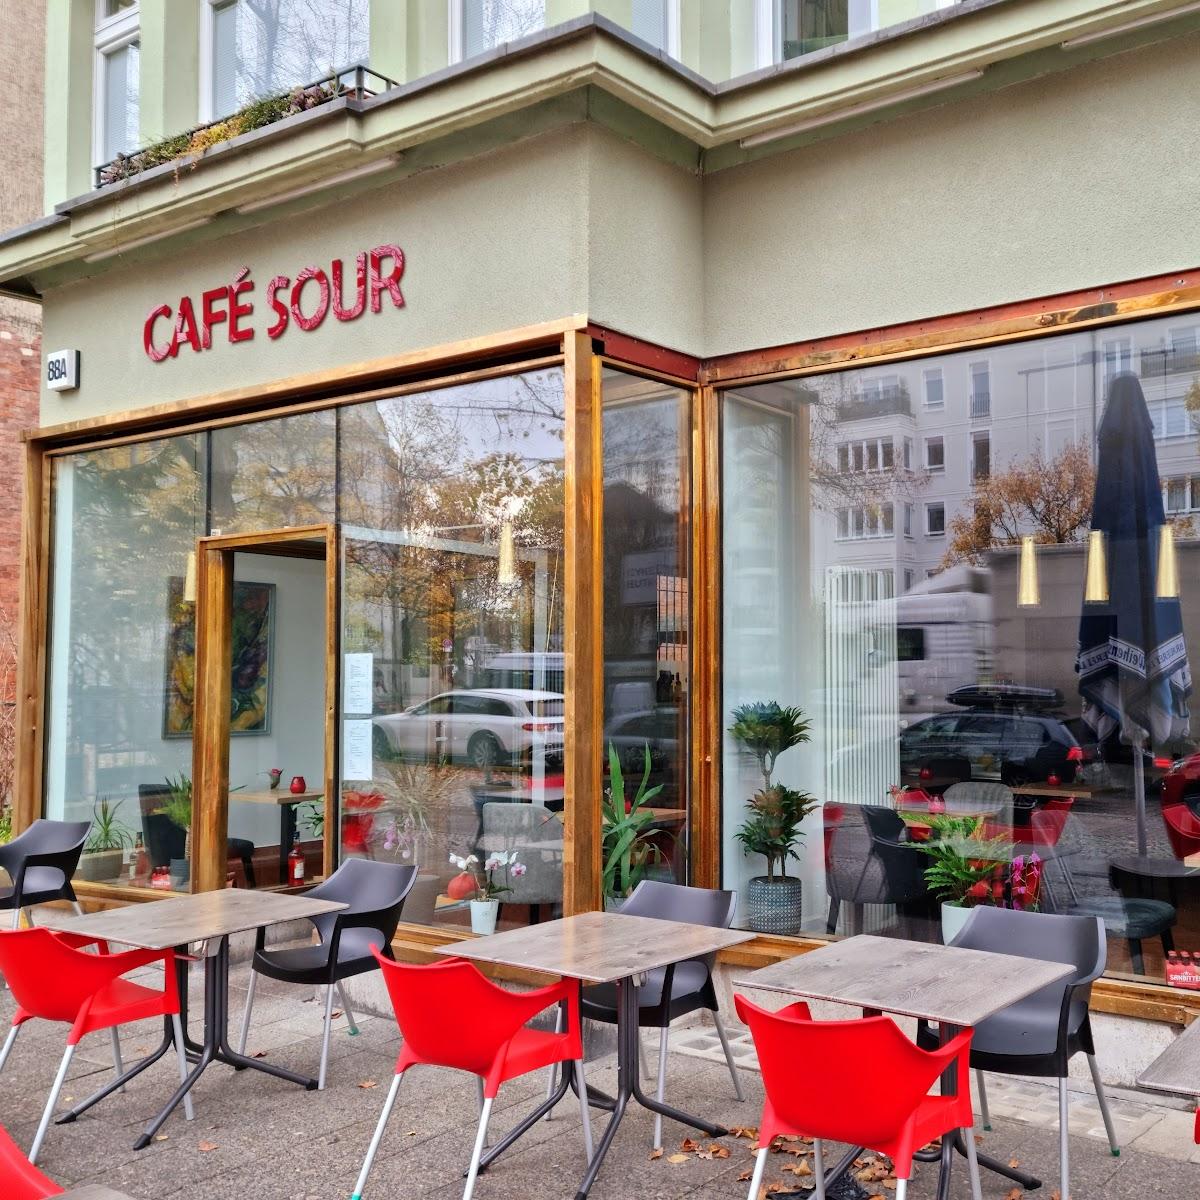 Restaurant "Cafe Sour" in Berlin